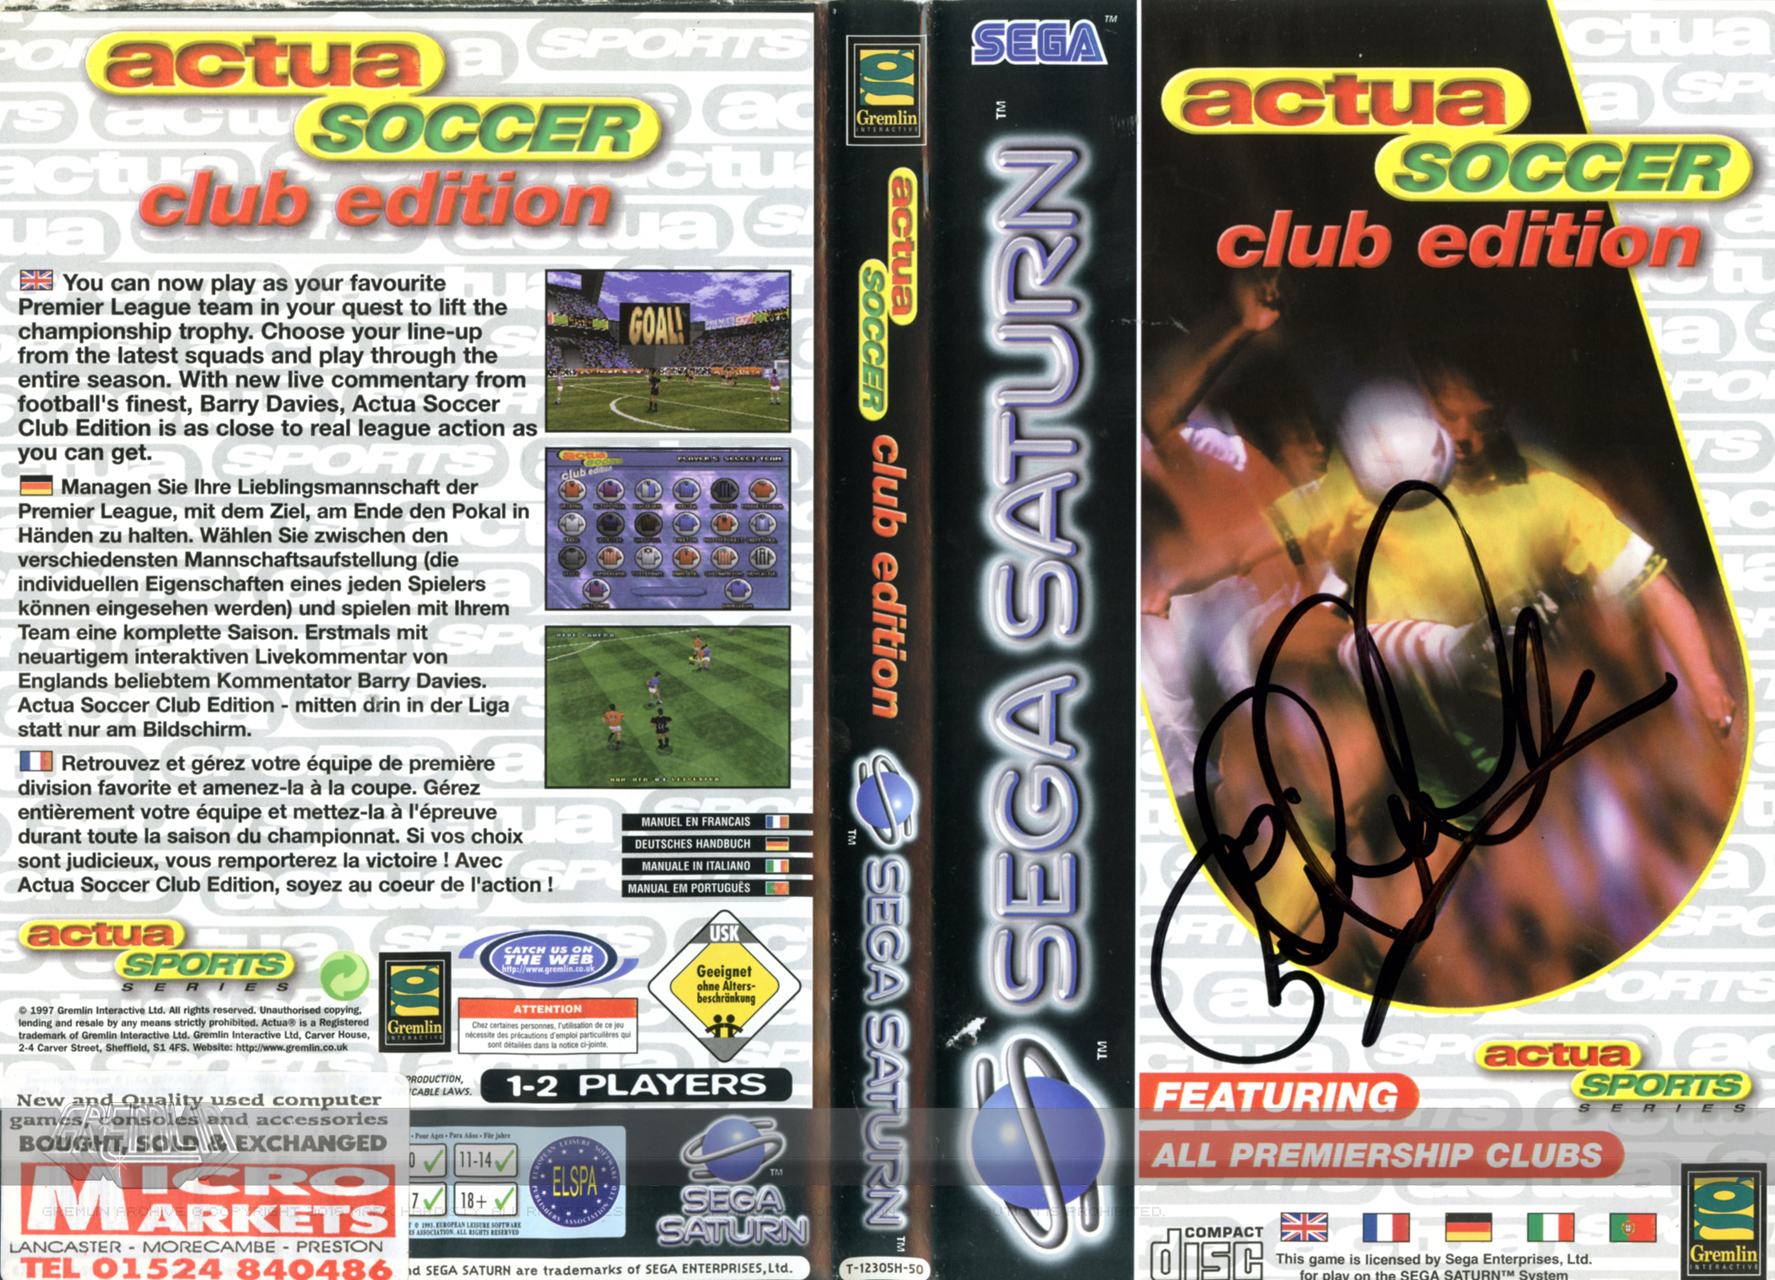 Actua Soccer: Club Edition (Saturn, Signed)